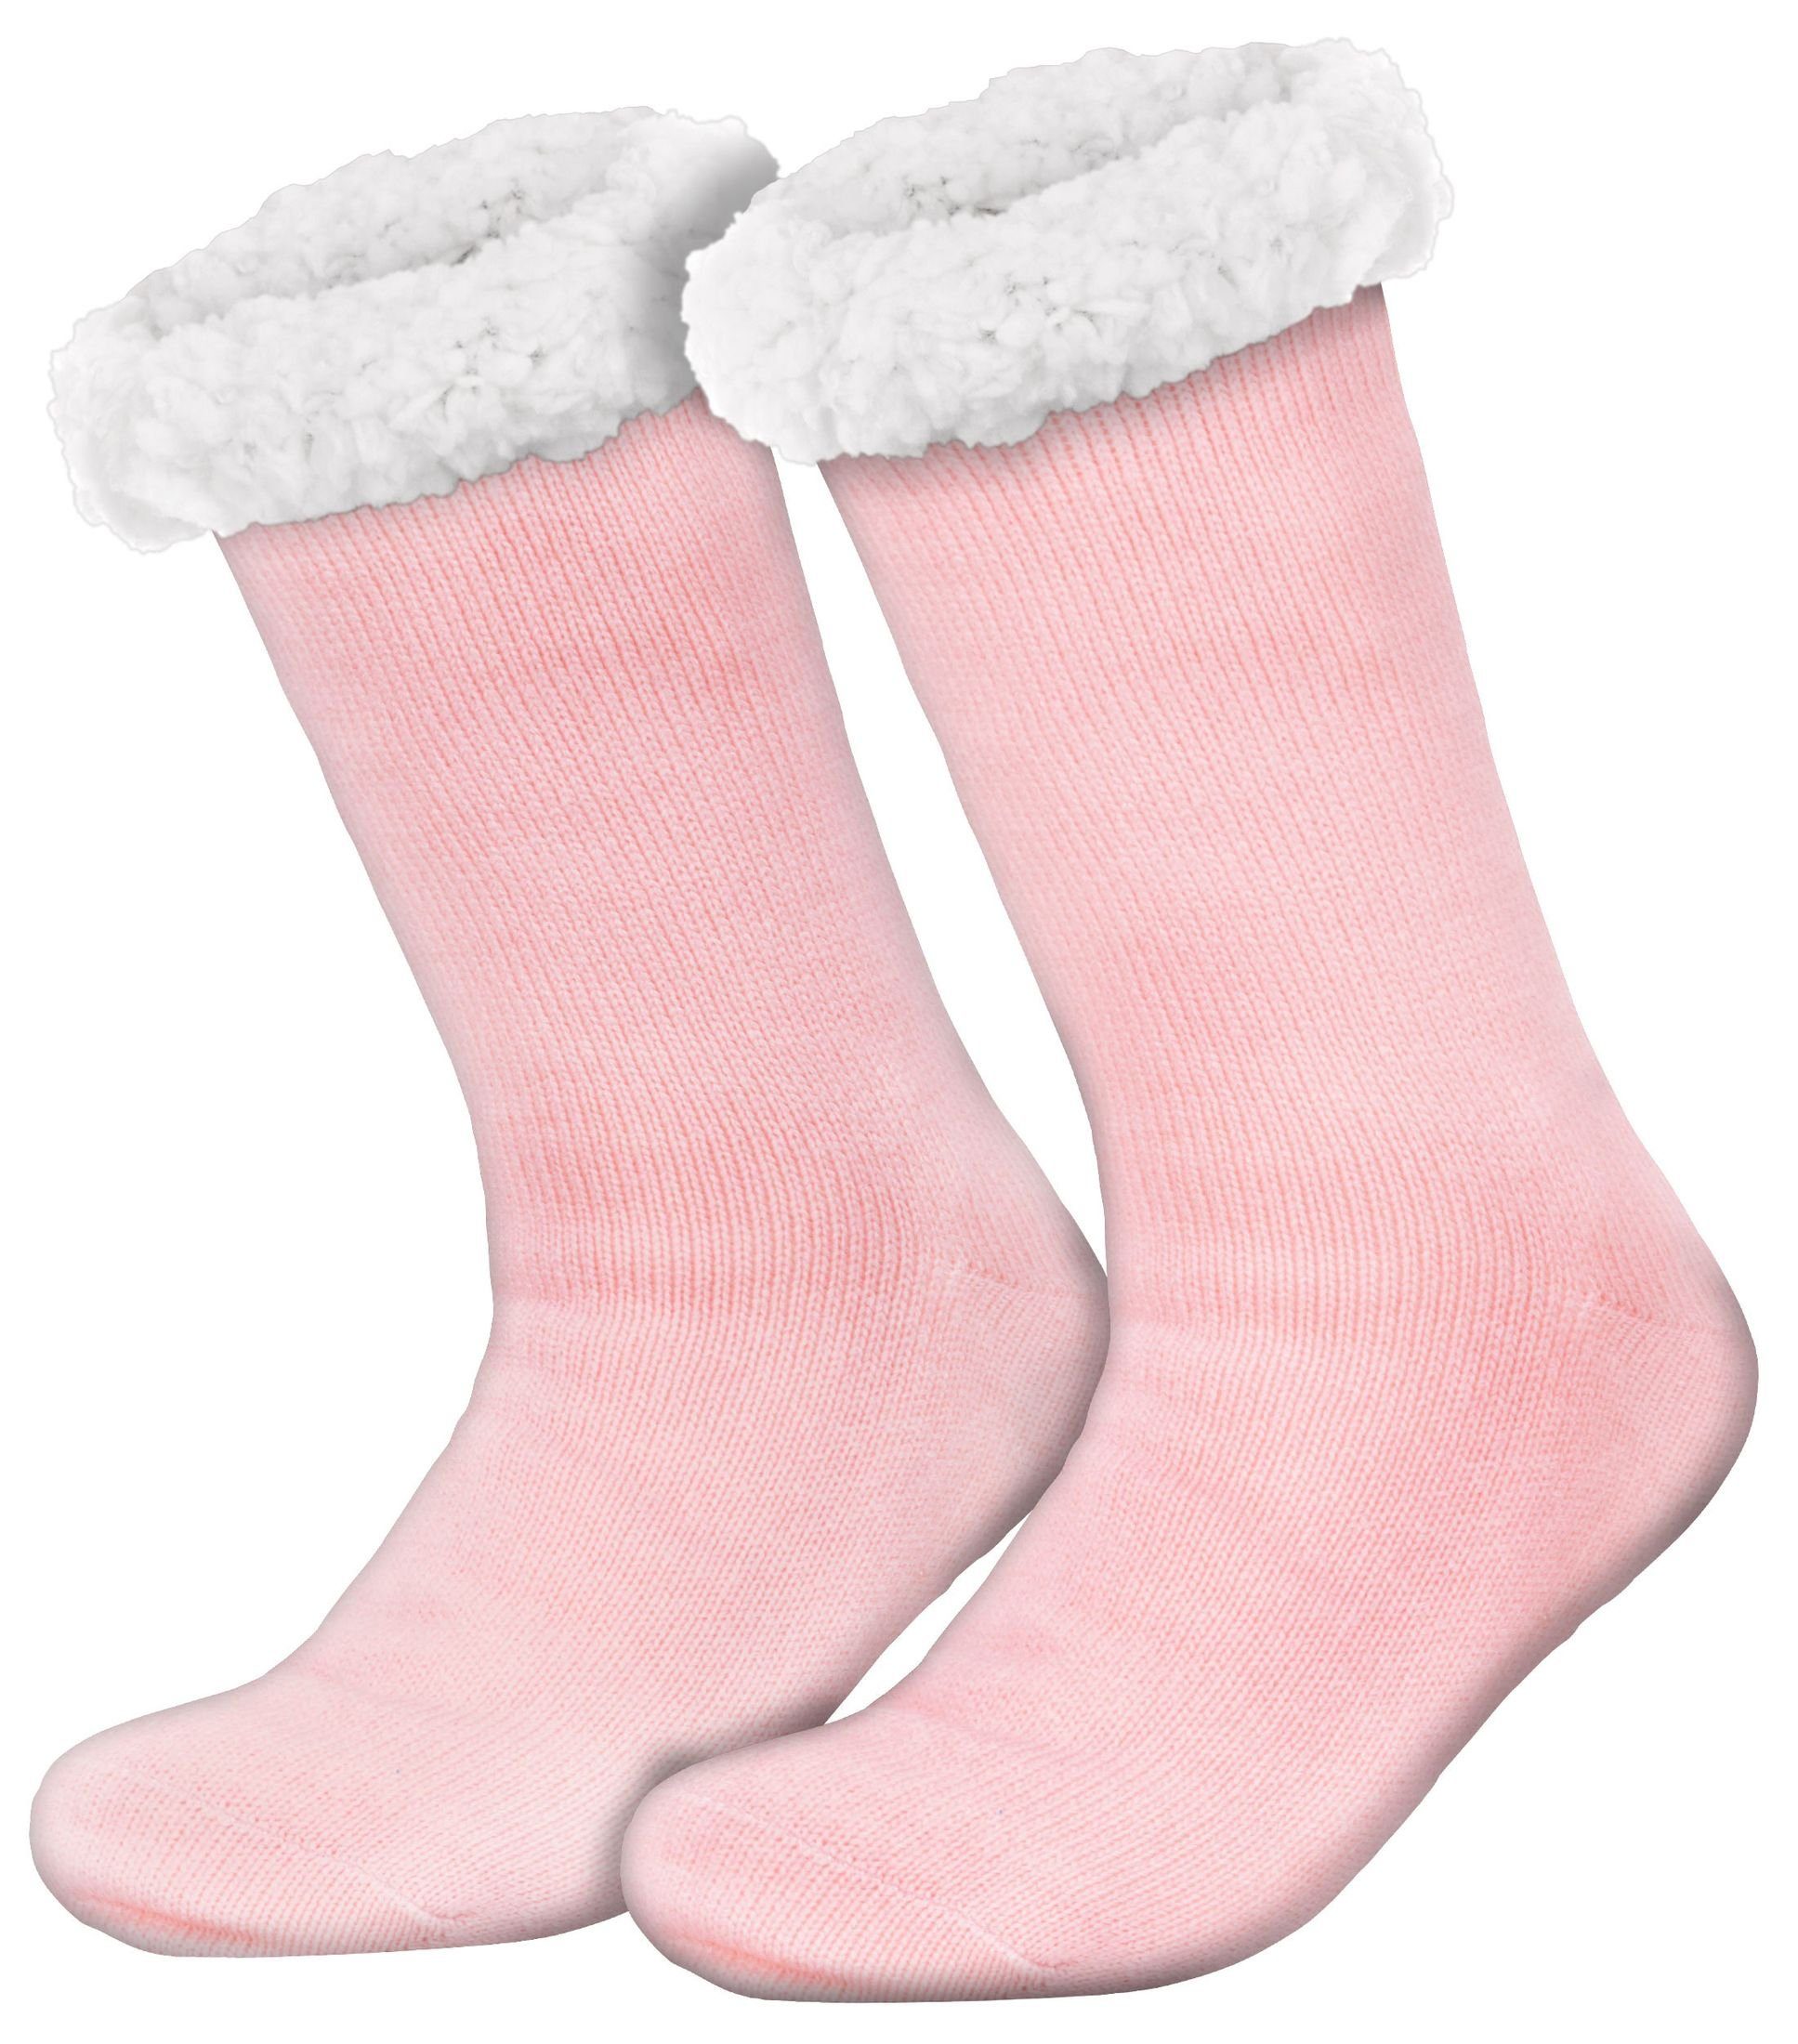 Herren Socken Unifarben Rutsch Einheitsgröße rosa (1-Paar) Kuschelsocken Damen Noppensocken Anti Kuschelsocken Wintersocken compagno